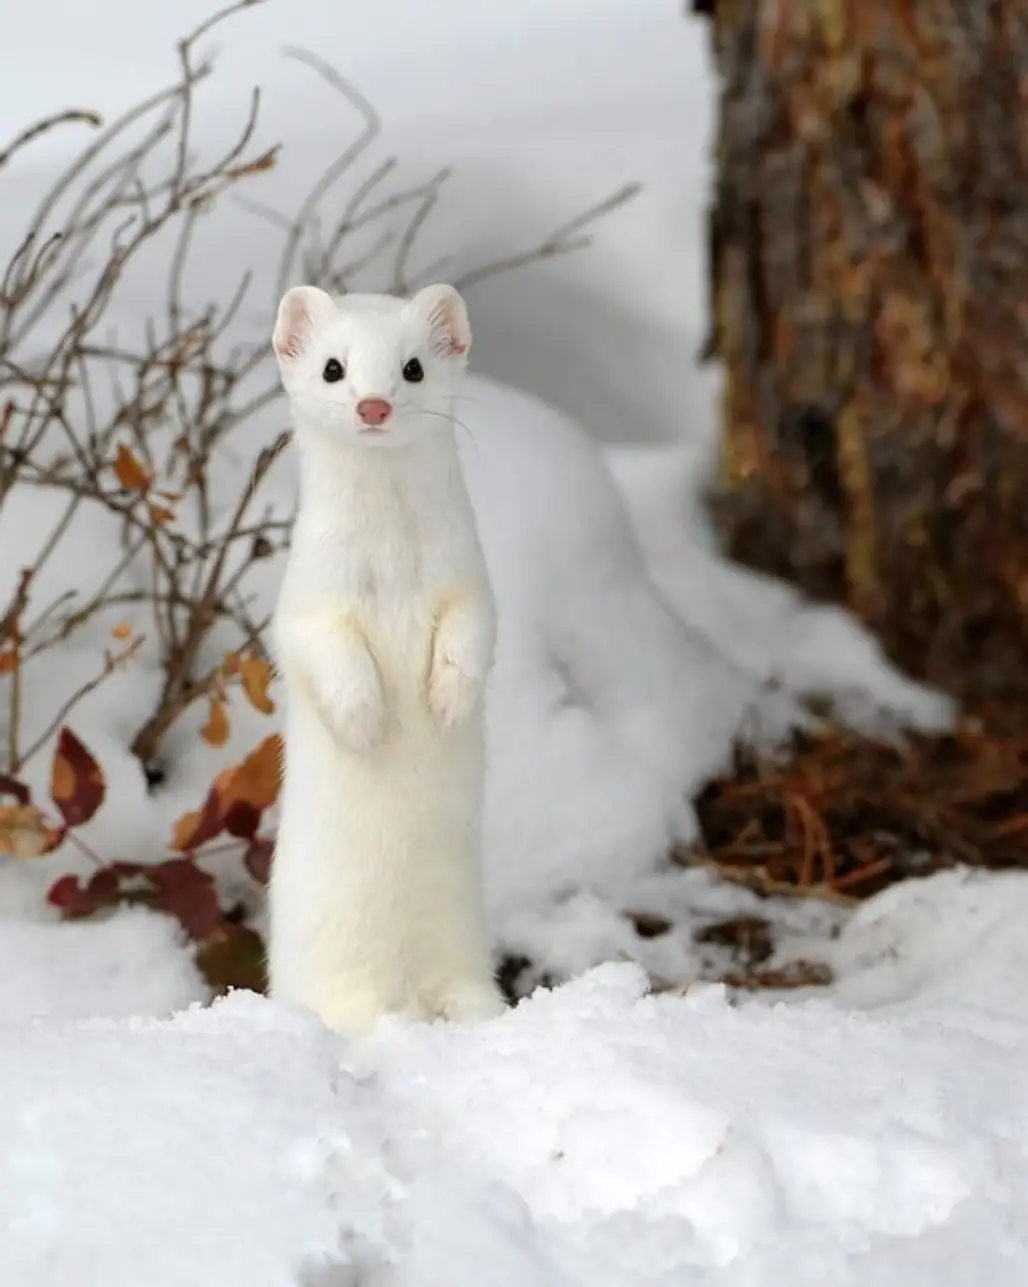 "No" I Am Not an Albino Meerkat! I'm a Stoat in My Winter Coat"